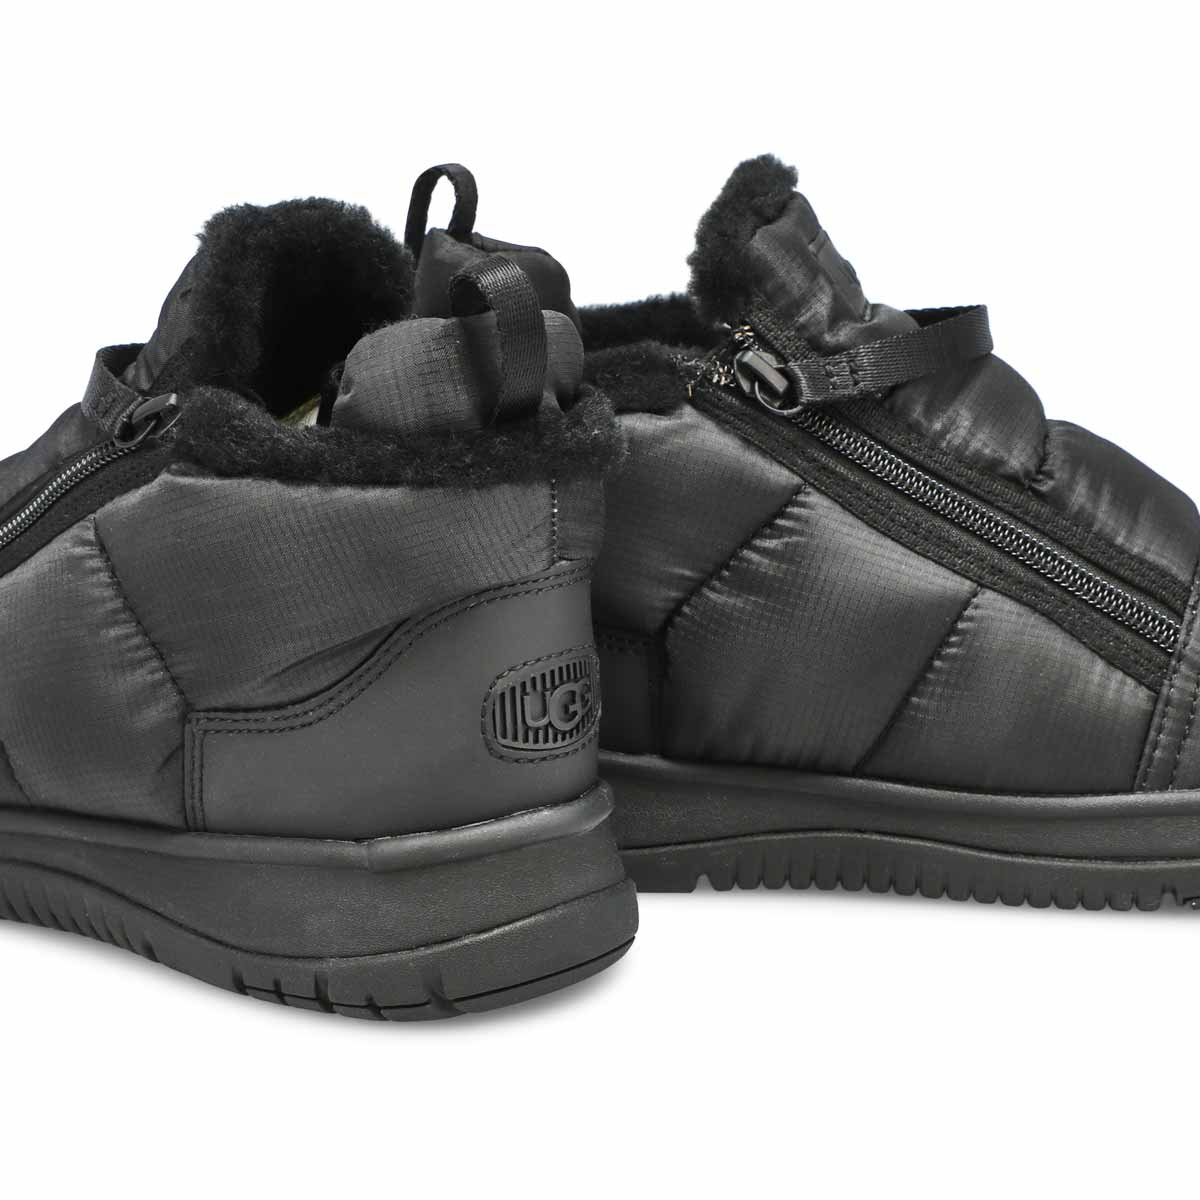 Women's Lakesider Zip Puff Waterproof Boot - Black